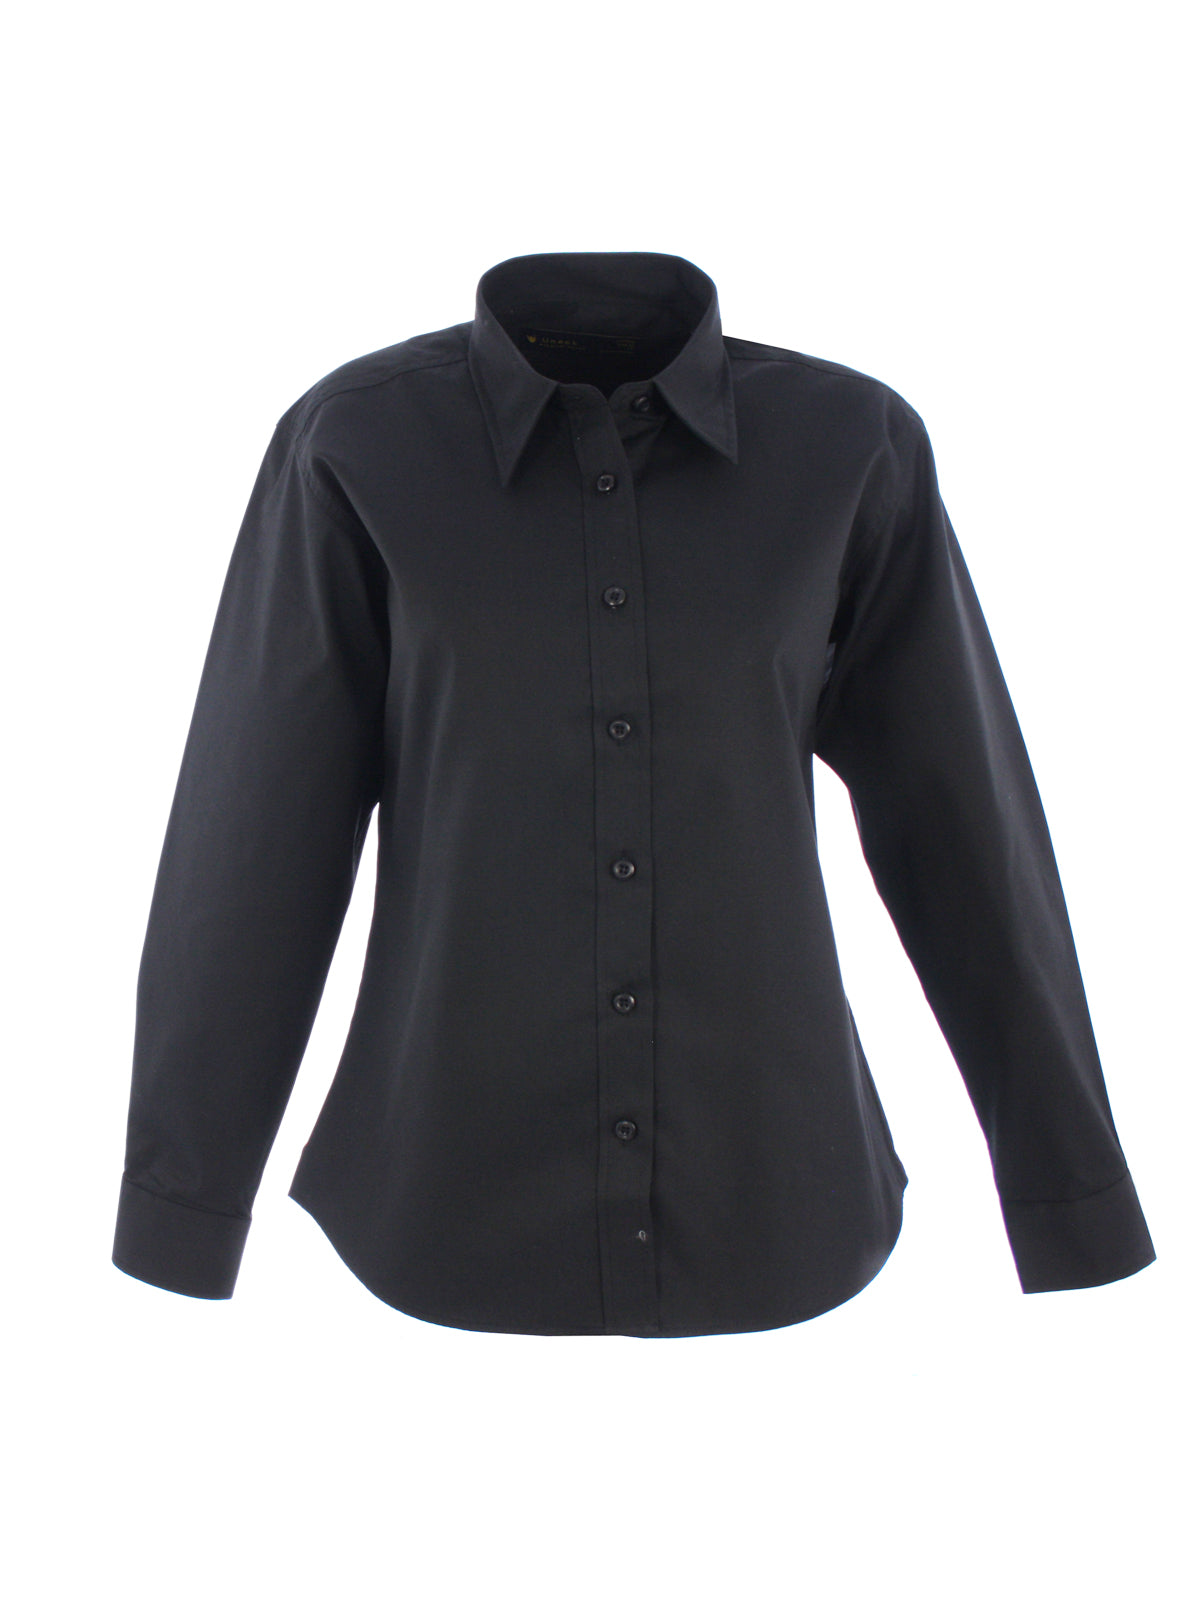 Uneek Ladies Pinpoint Oxford Full Sleeve Shirt UC703 - Black